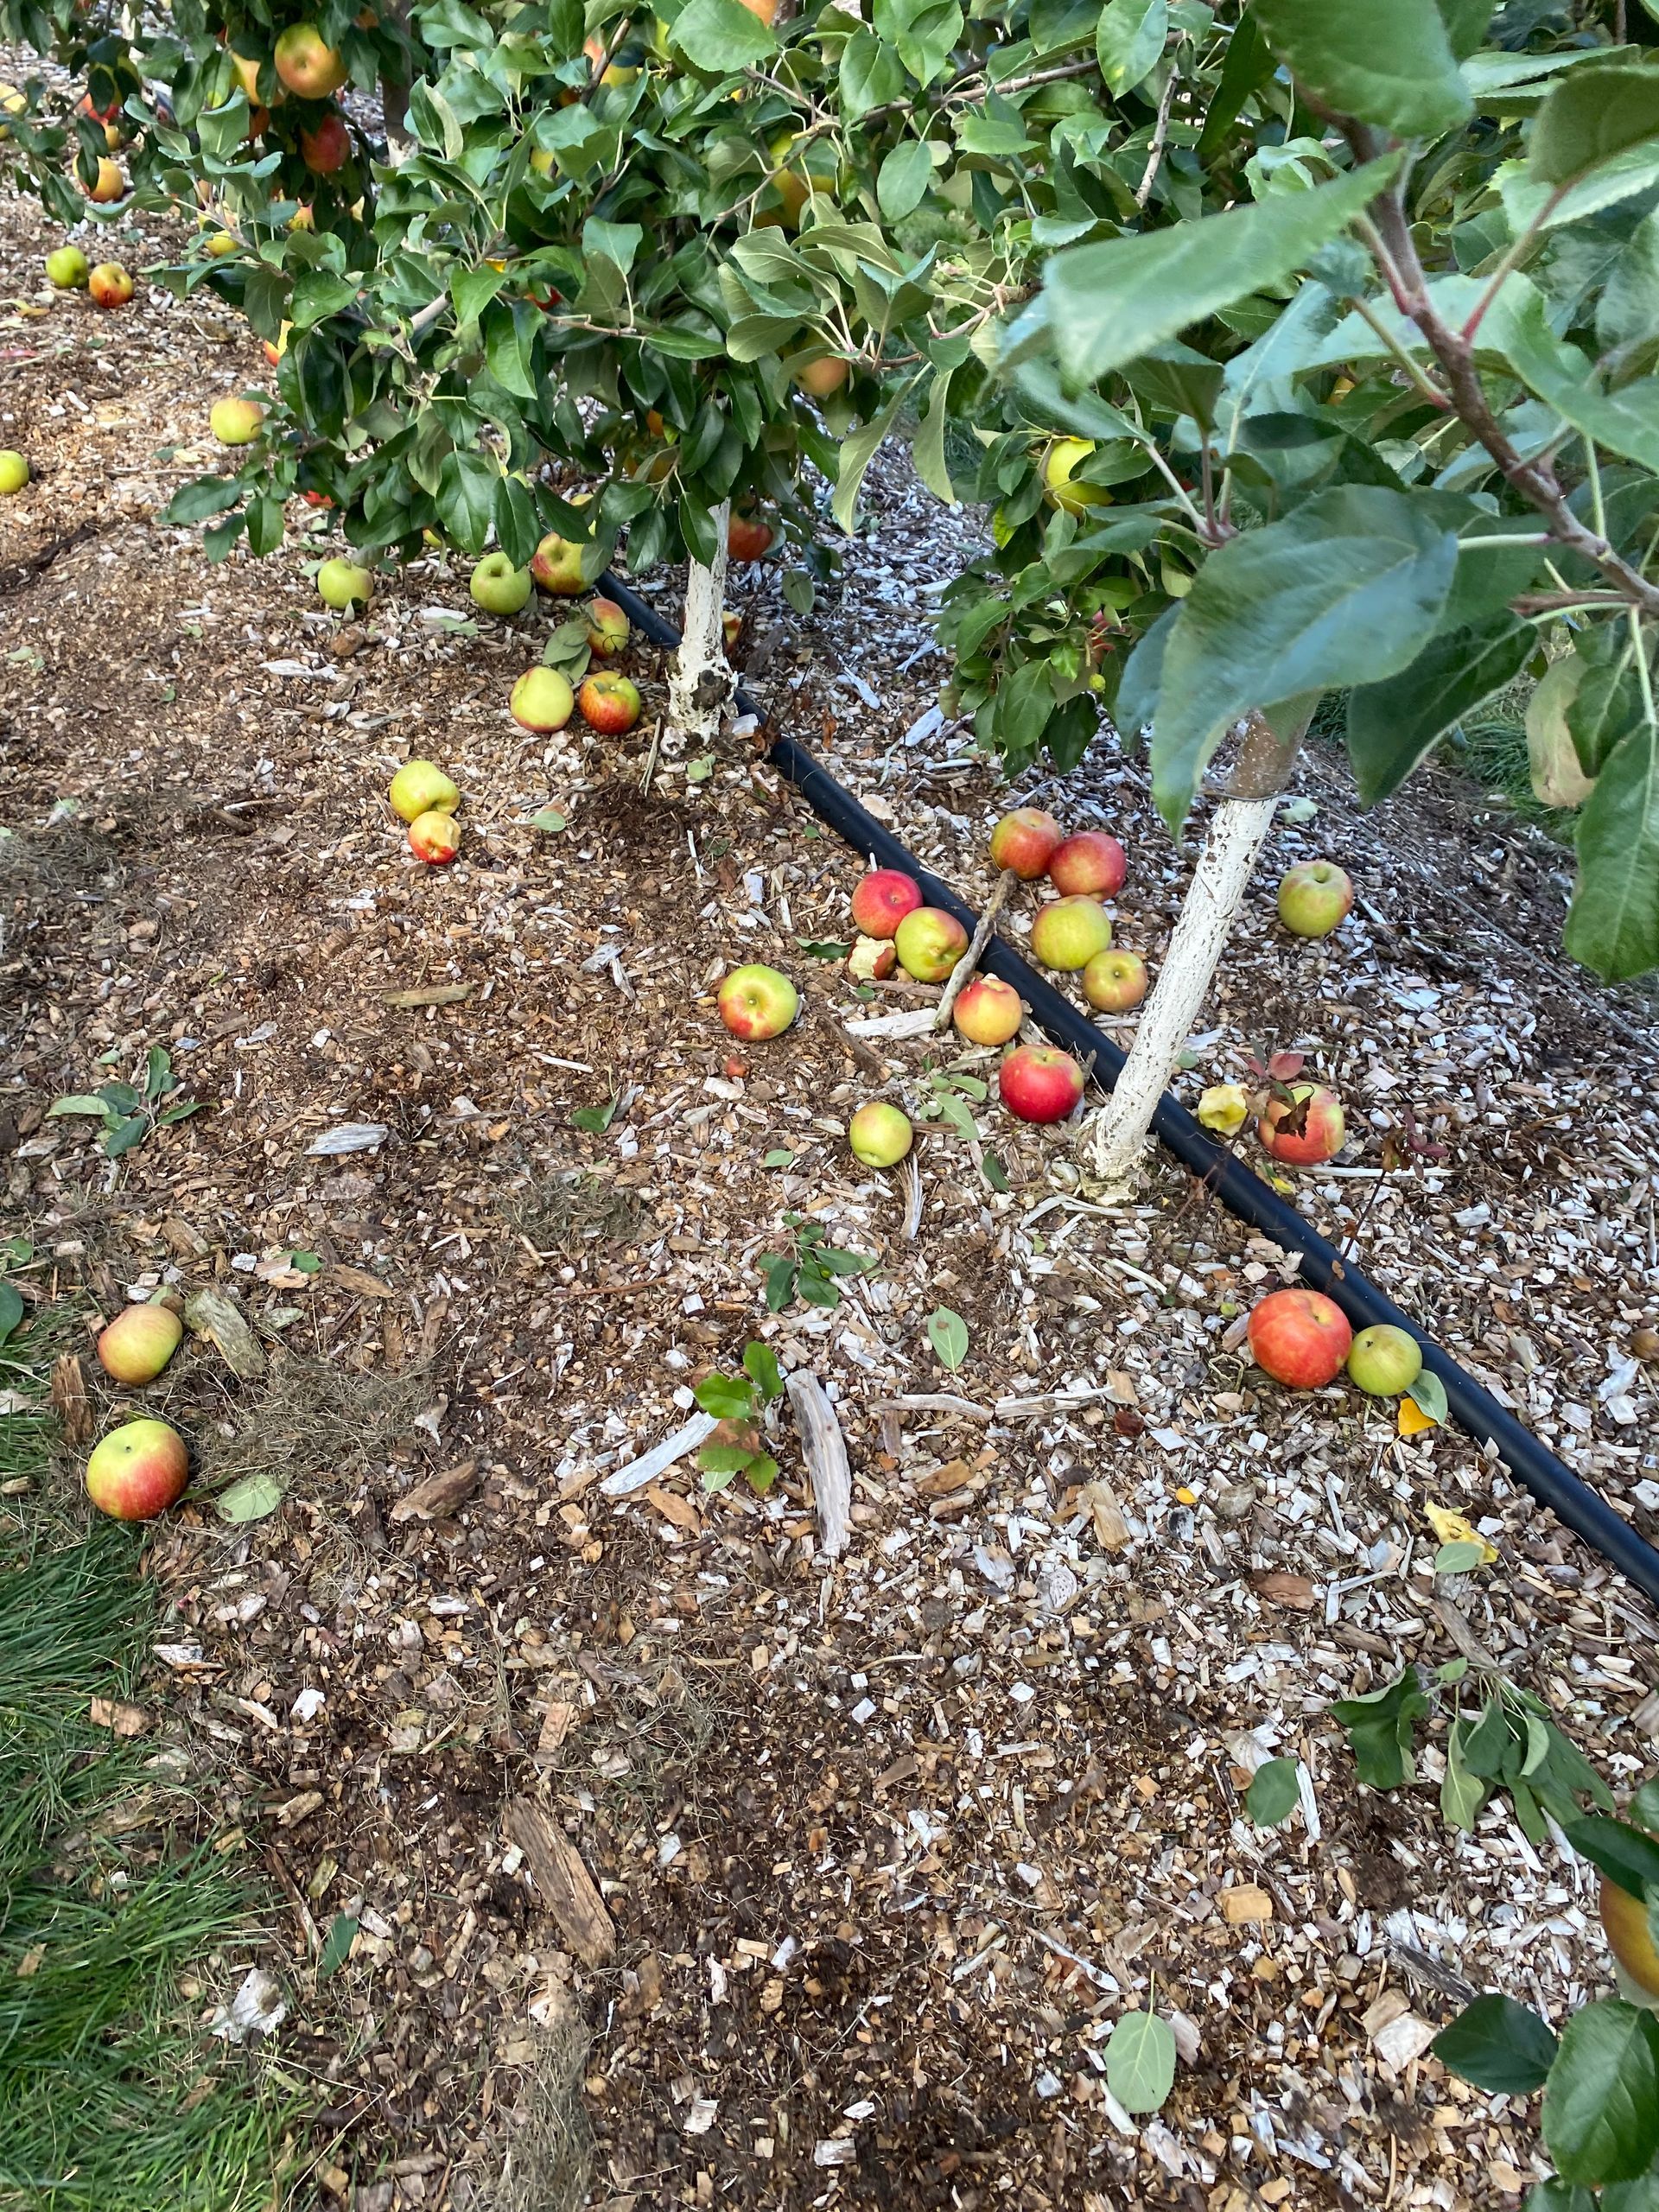 mainline tubing under apple trees